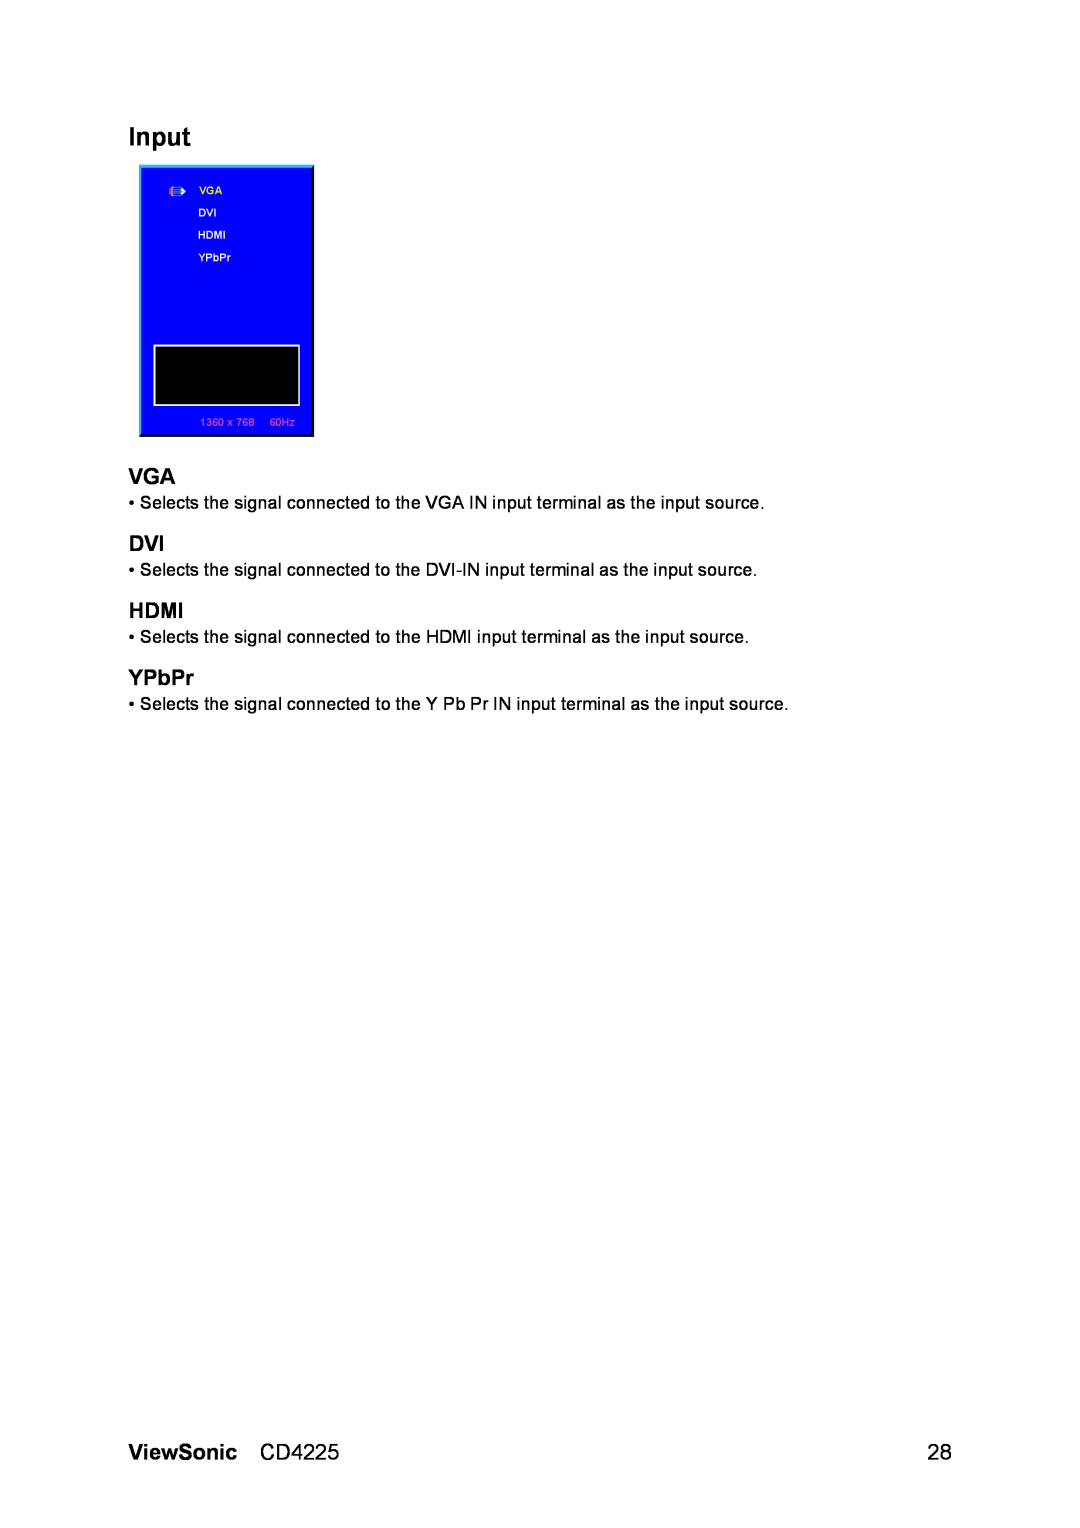 ViewSonic CD4225 manual Input 